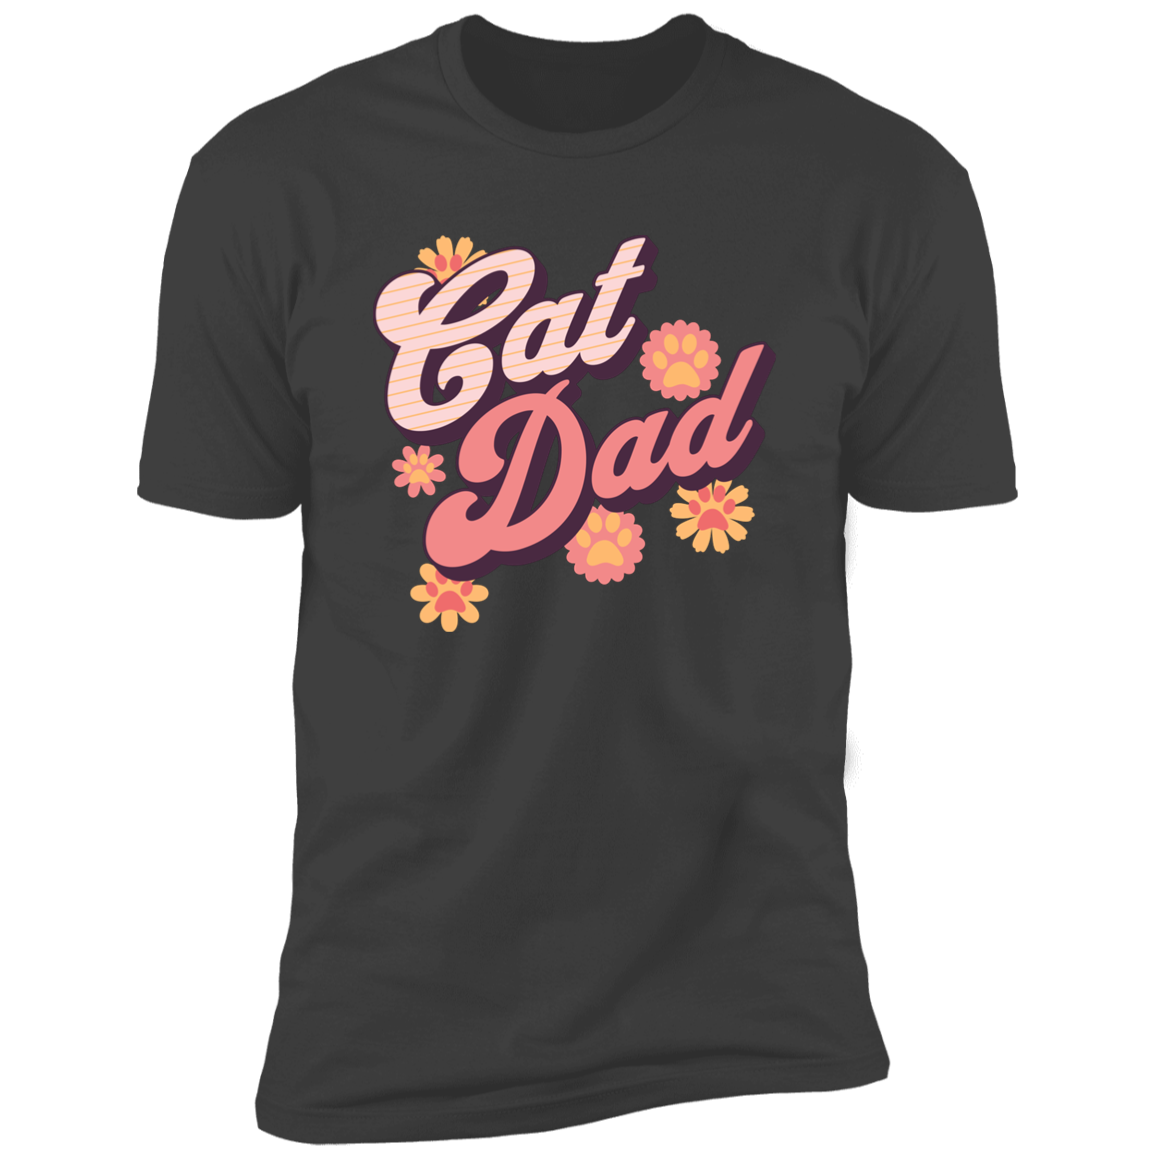 Cat Dad Retro T-shirt, Cat shirt for humans, retro cat dad t-shirt, in heavy metal gray